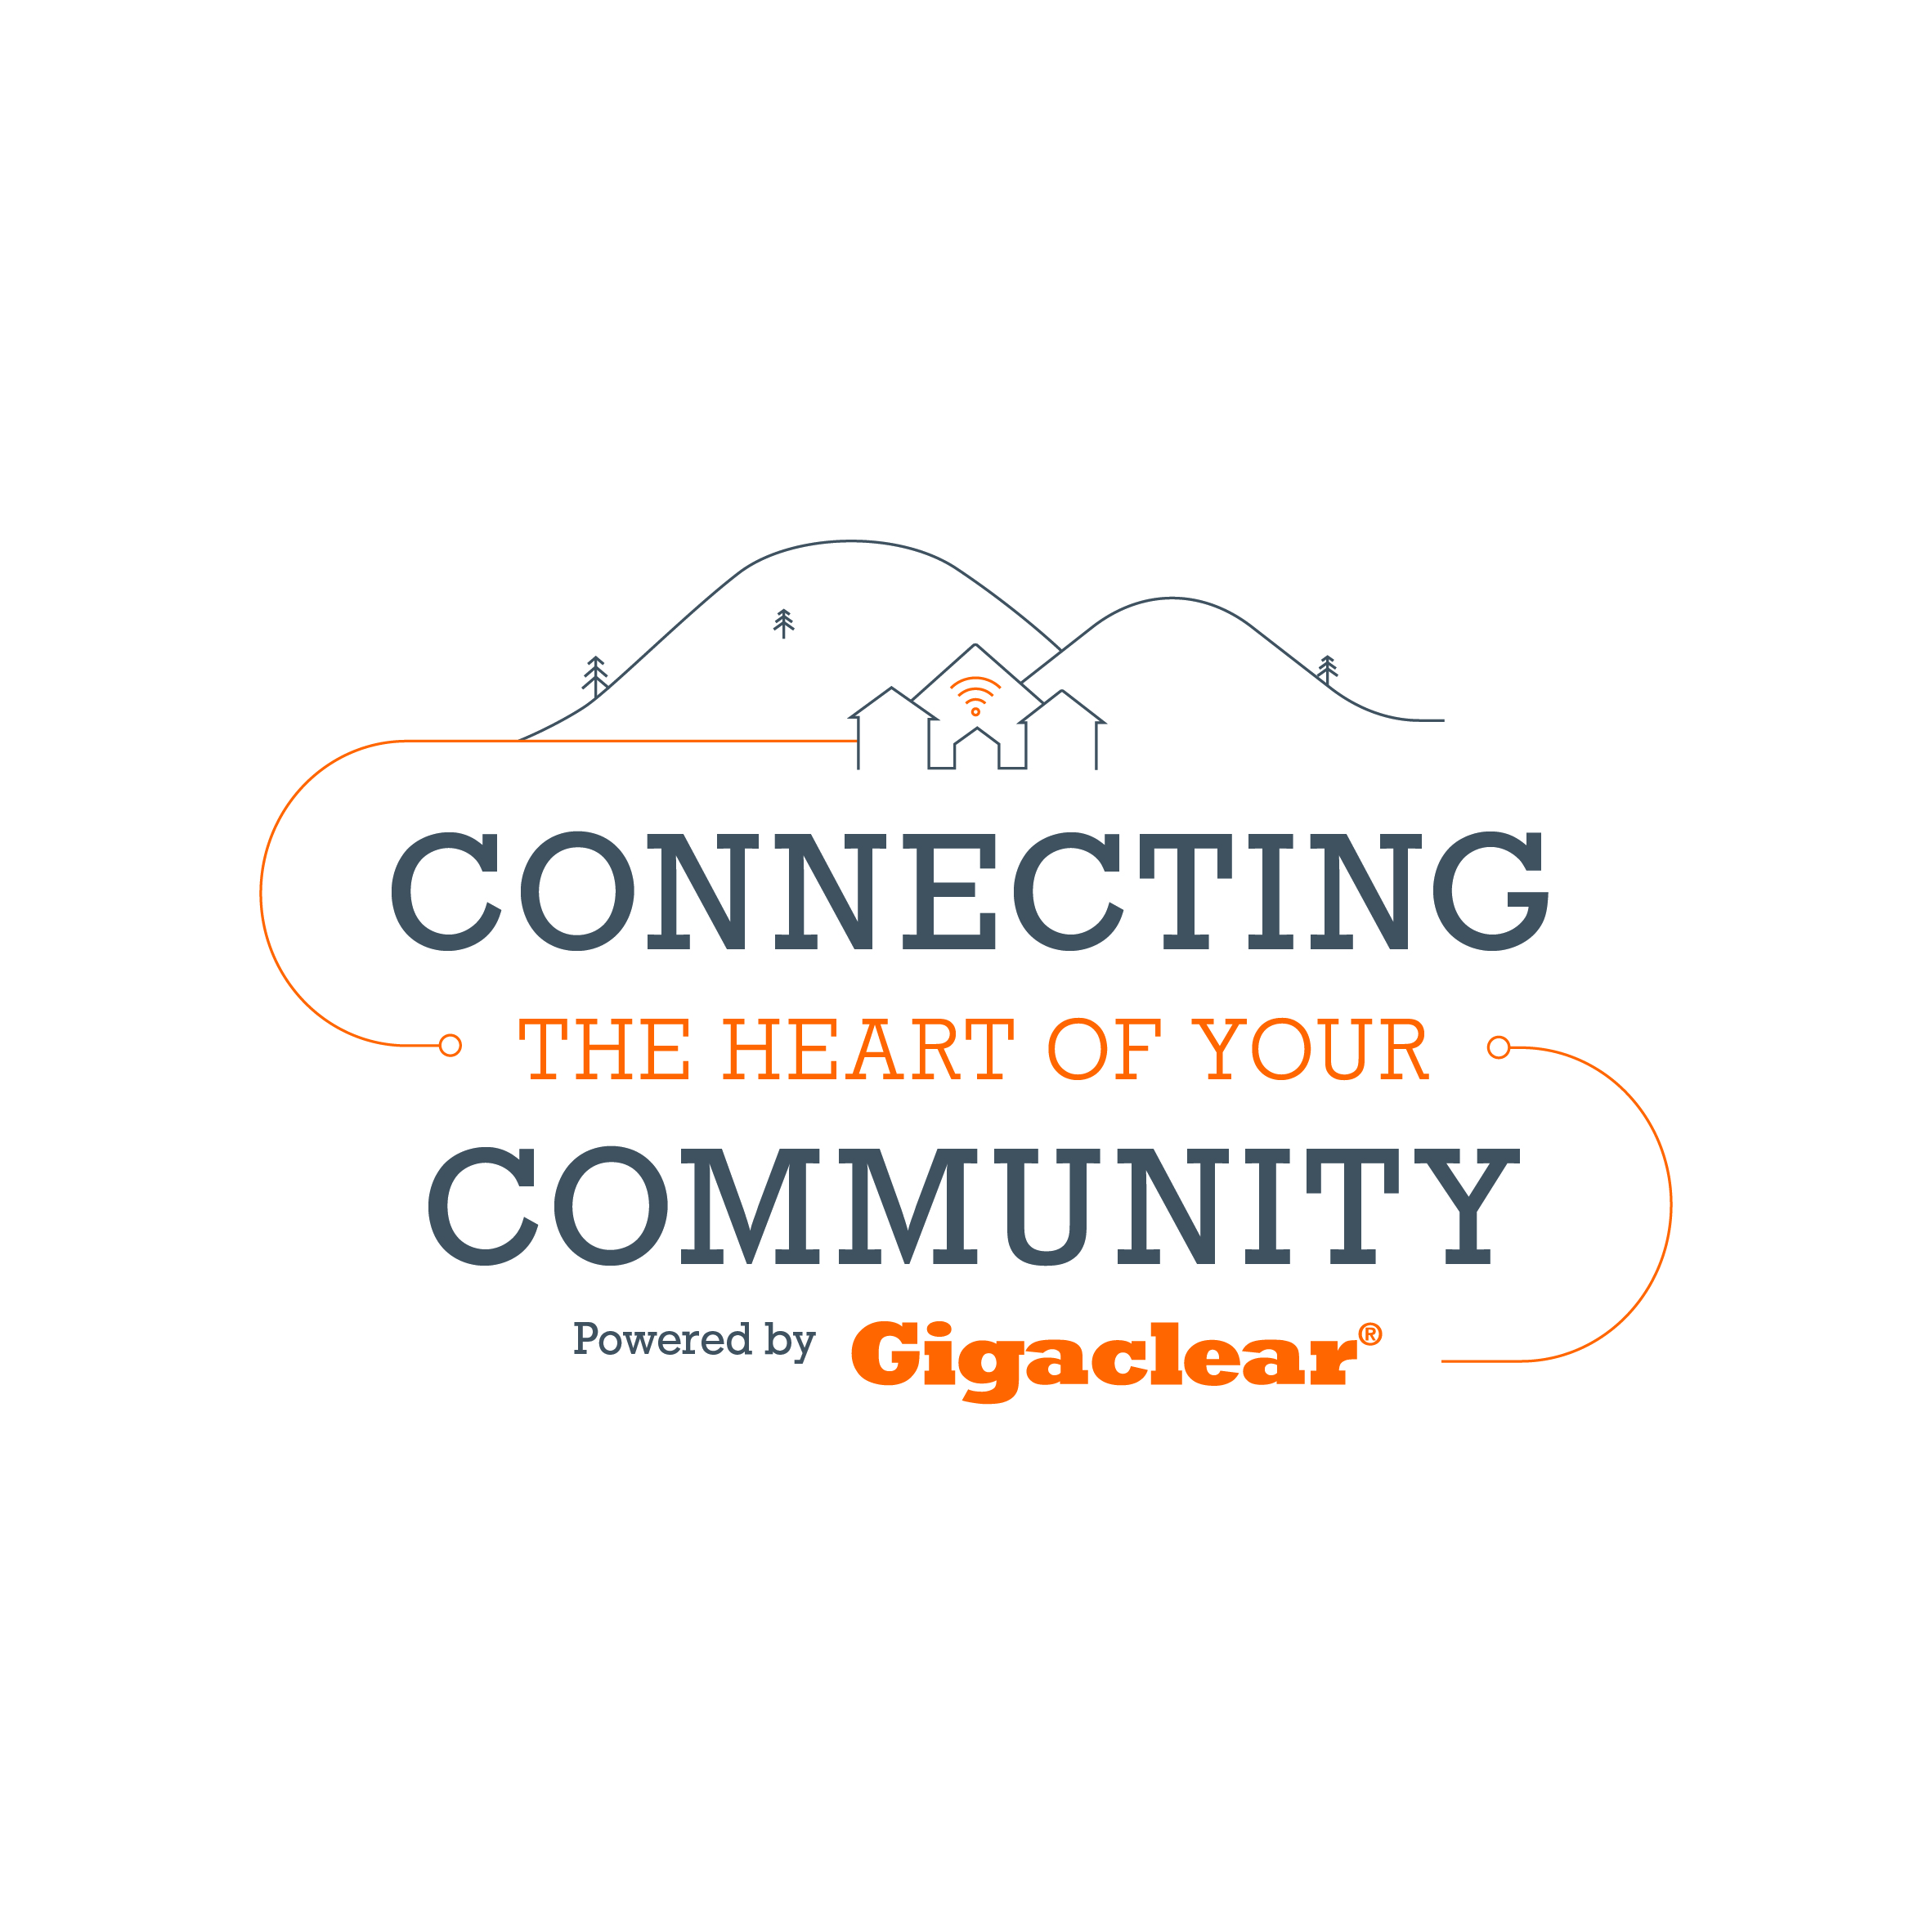 GIGACLEAR PROVIDES FREE INTERNET TO KEY COMMUNITY HUBS @gigaclear